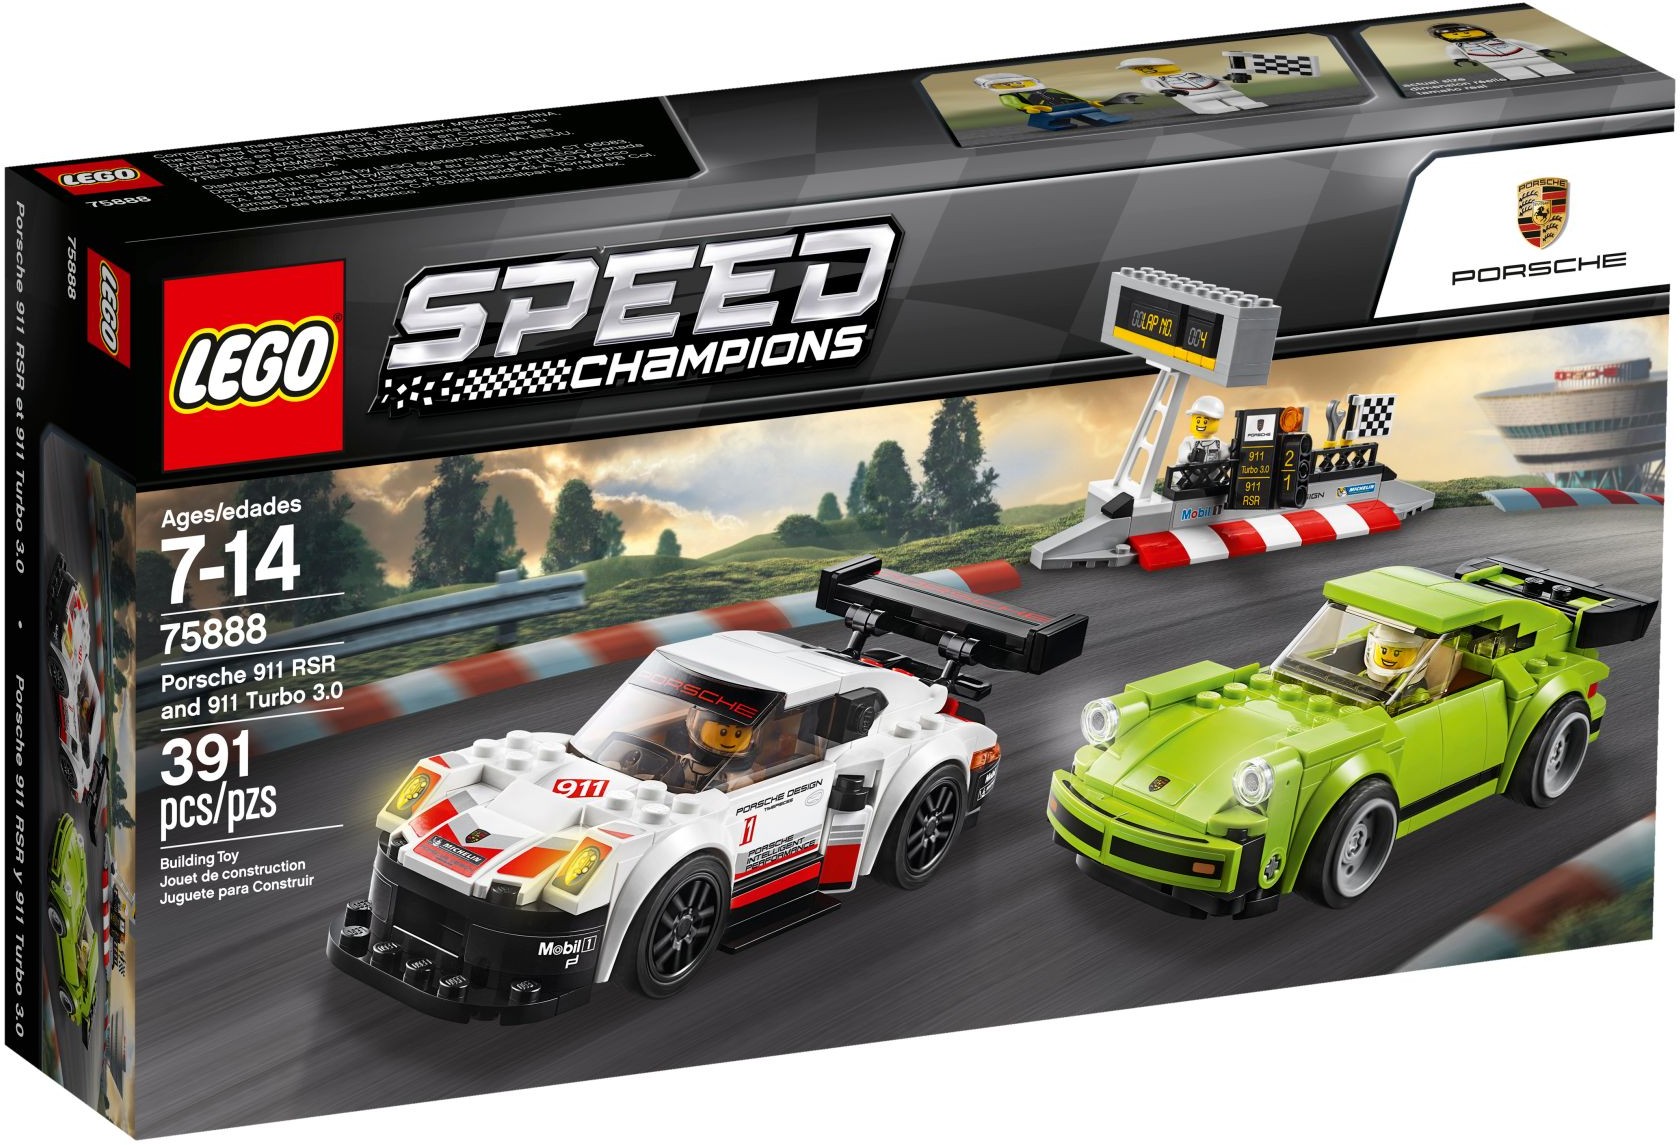 75888 LEGO Porsche 911 RSR and 911 Turbo 3.0 - Siêu xe